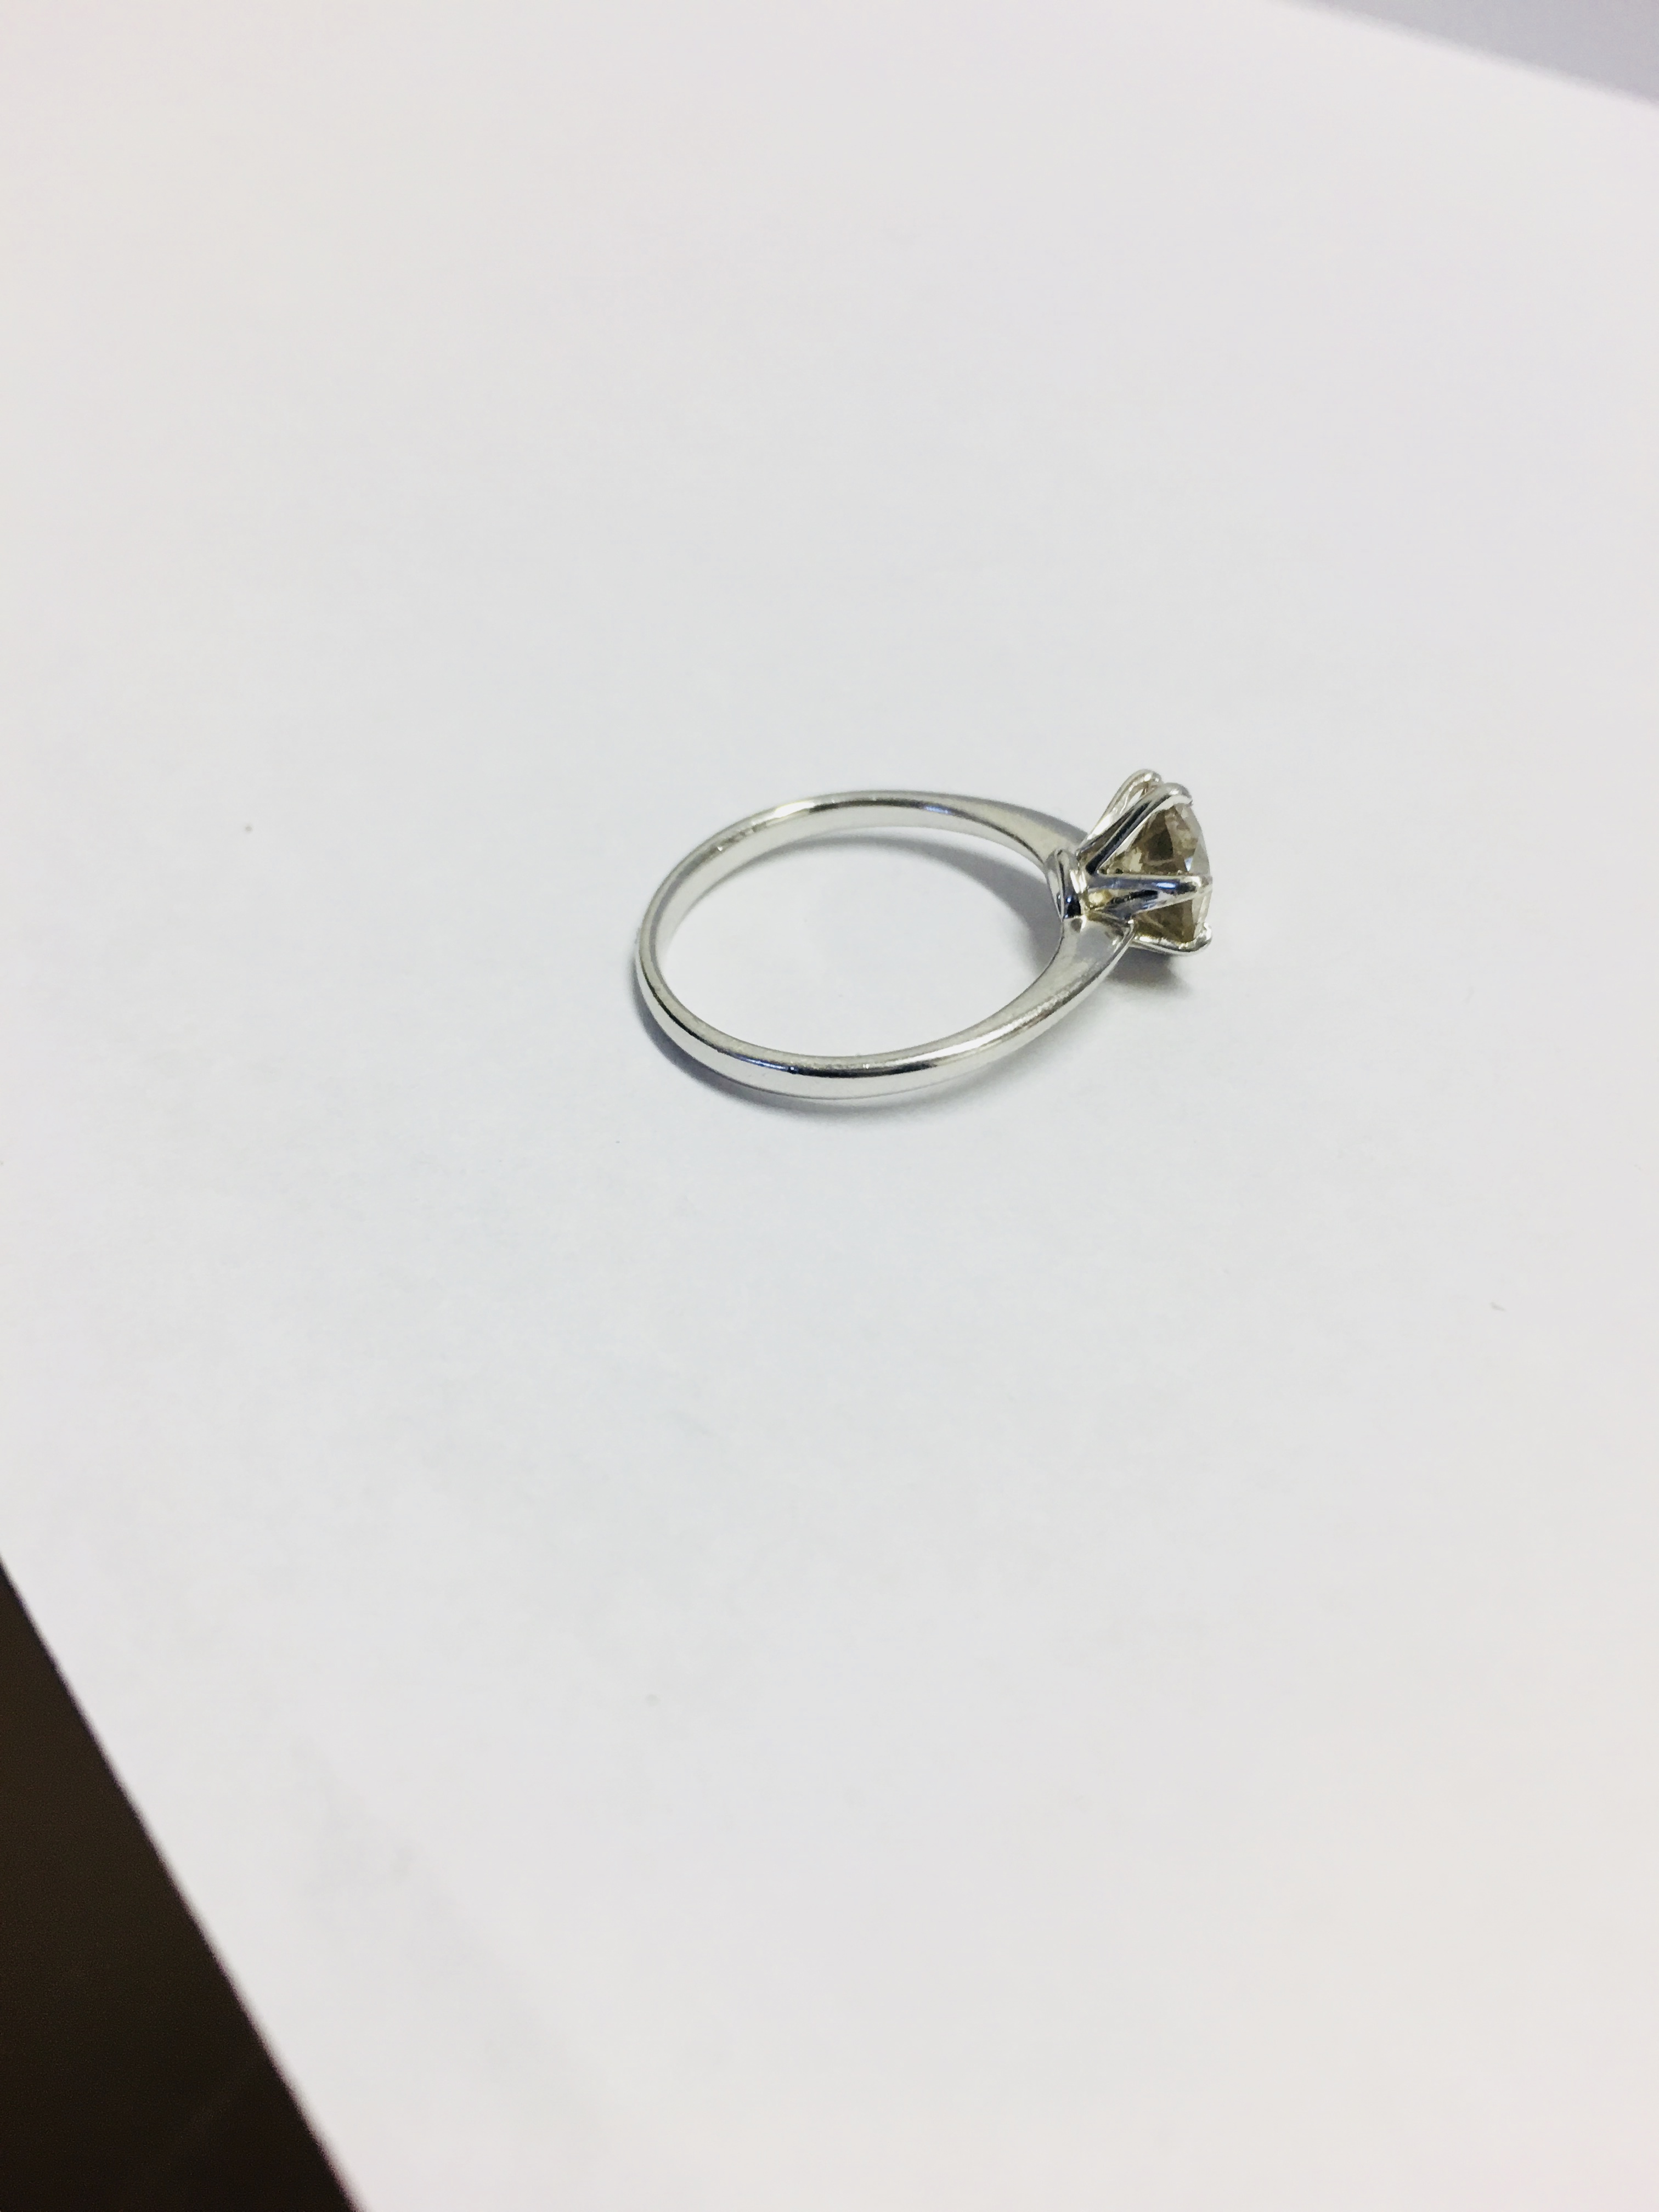 1Ct Brilliant Cut Diamond Solitaire Ring, - Image 5 of 6